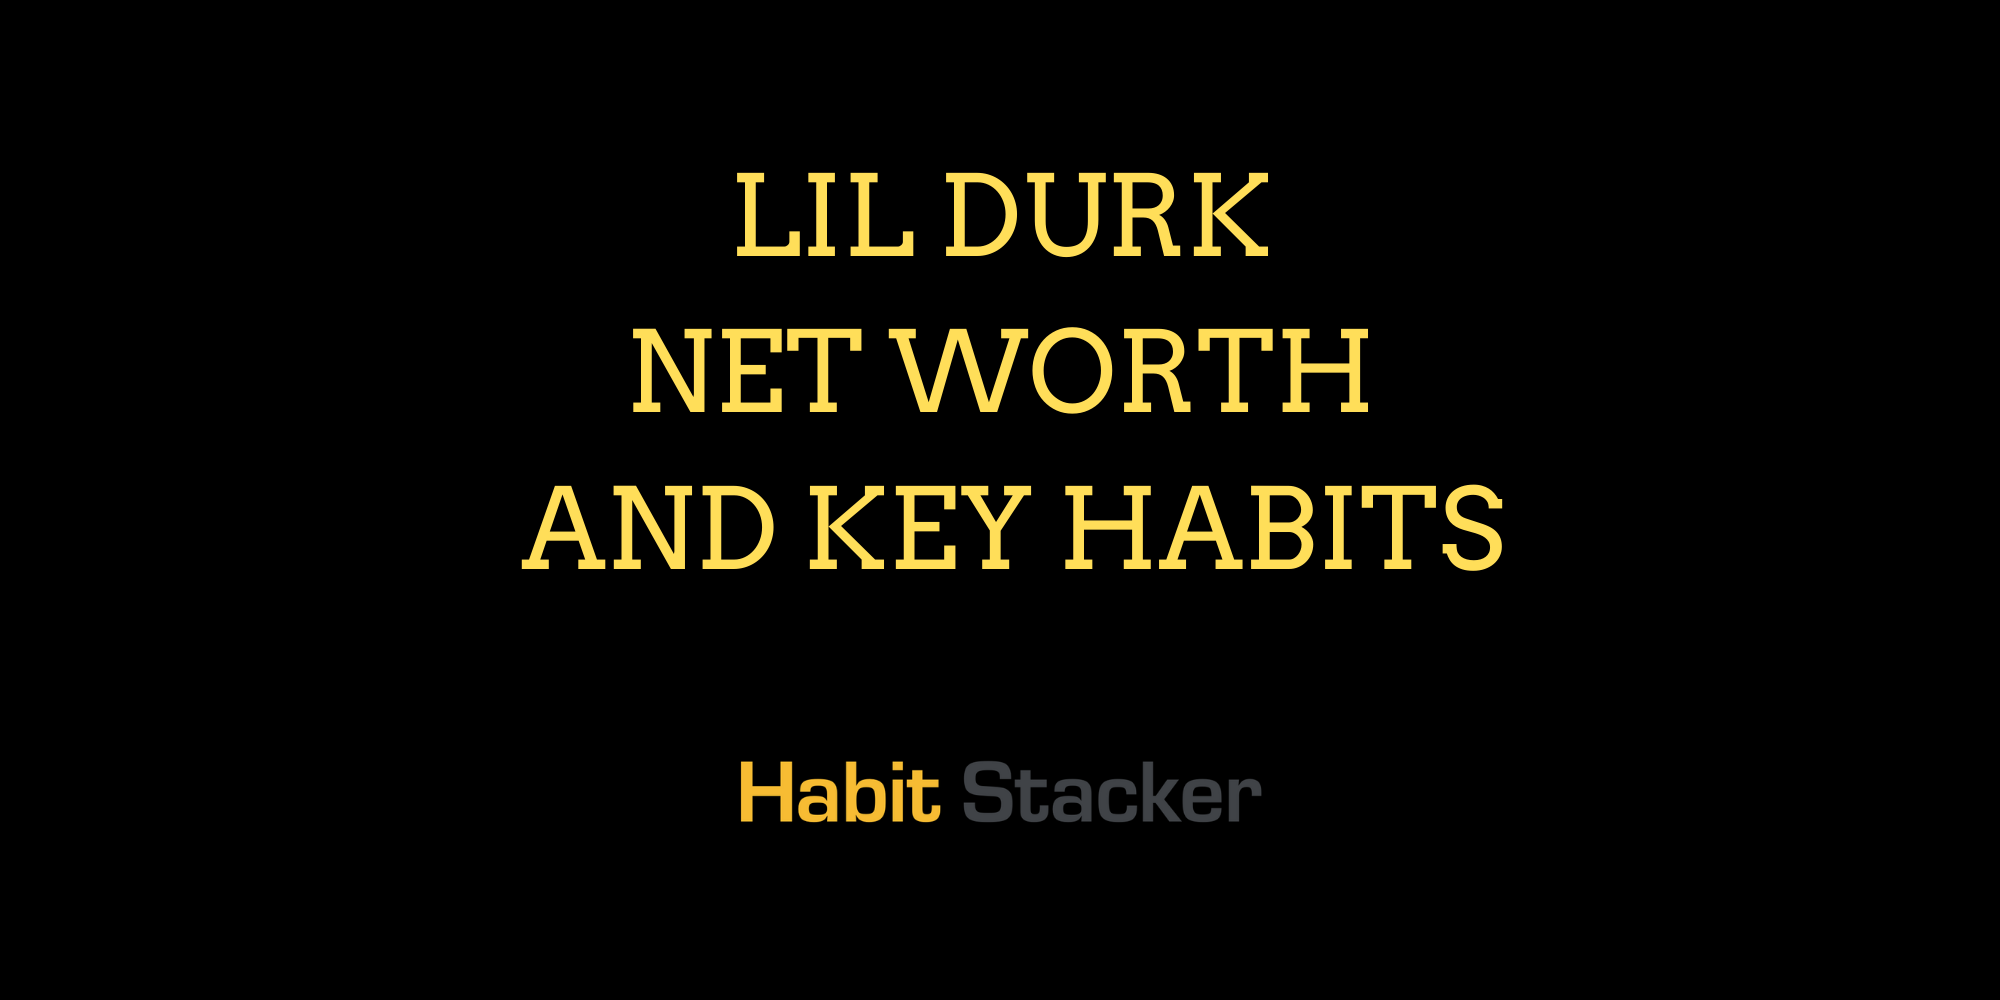 Lil Durk Net Worth and Key Habits